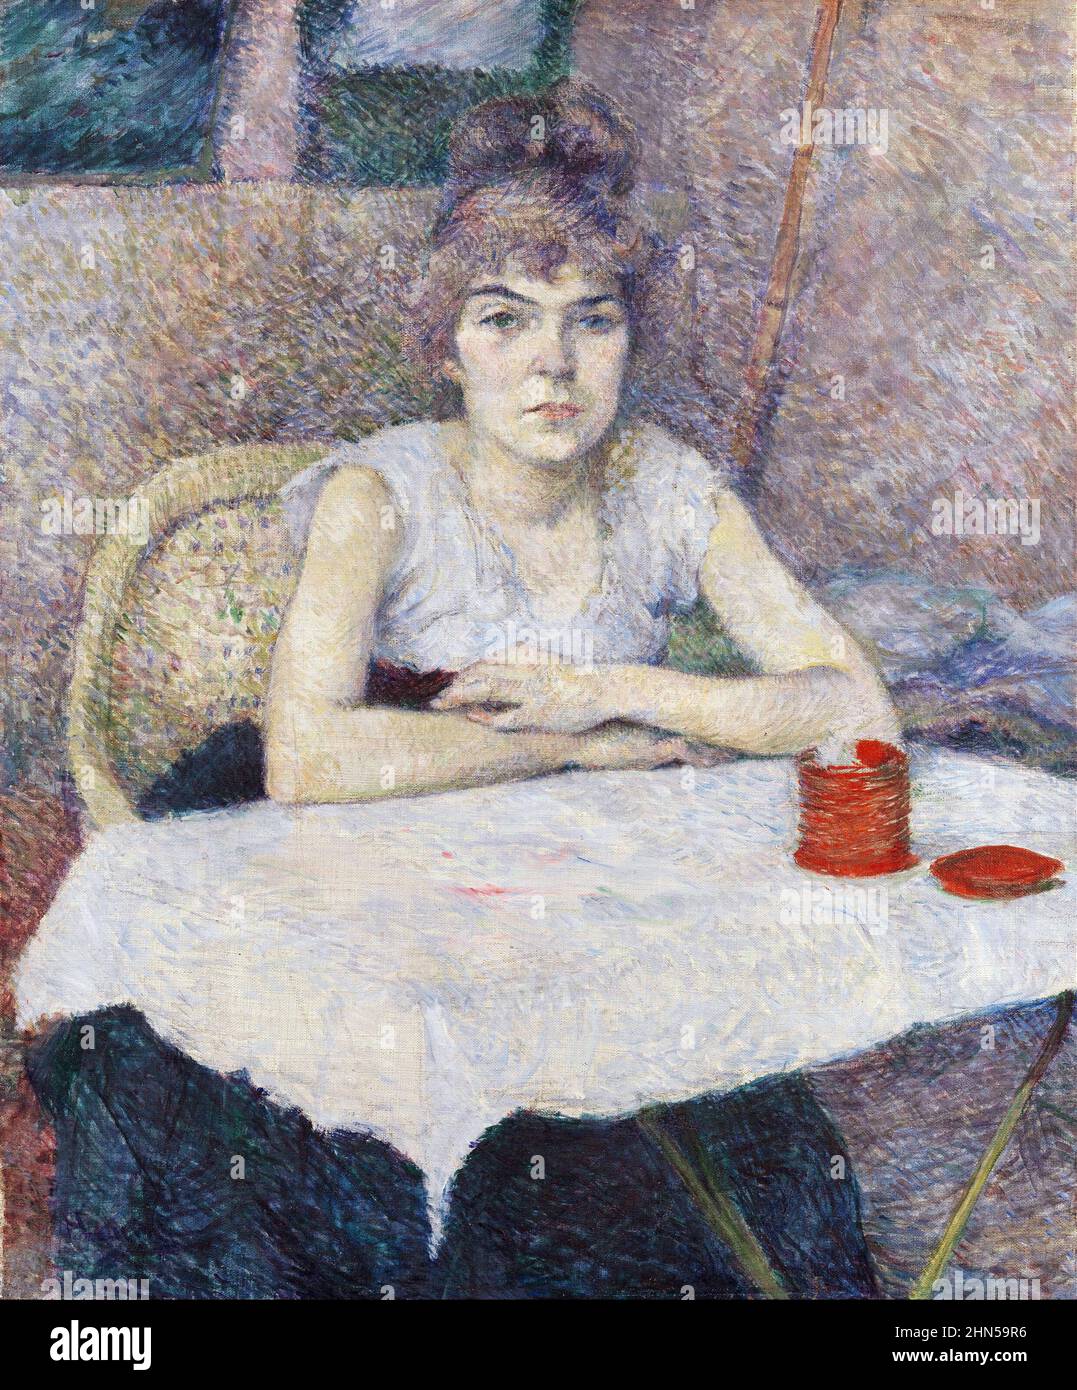 Junge Frau an einem Tisch, Poudre de riz - Antike Vintage-Kunst von Henri Toulouse-Lautrec. Stockfoto